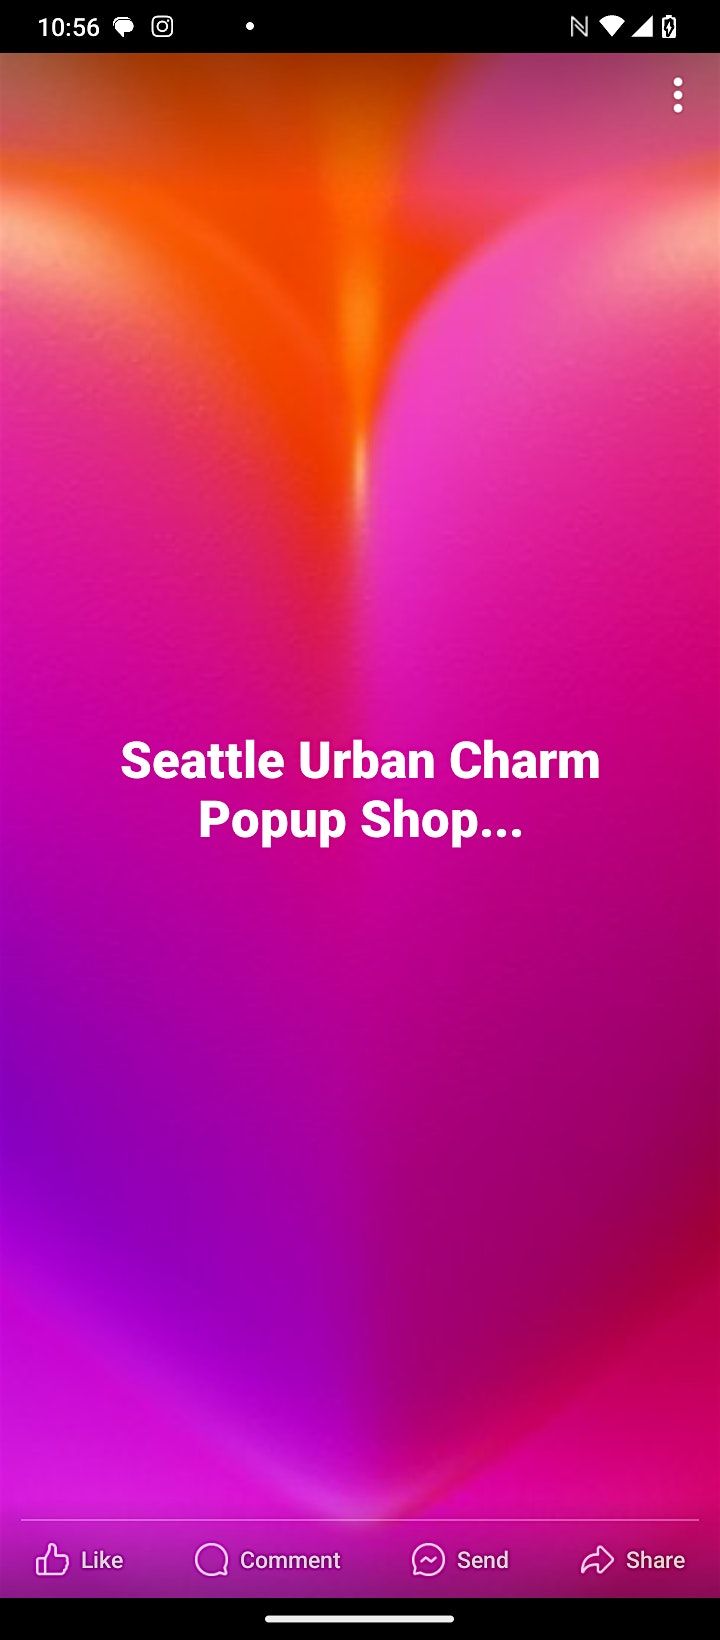 Seattle Urban Charm Pop Up Shop